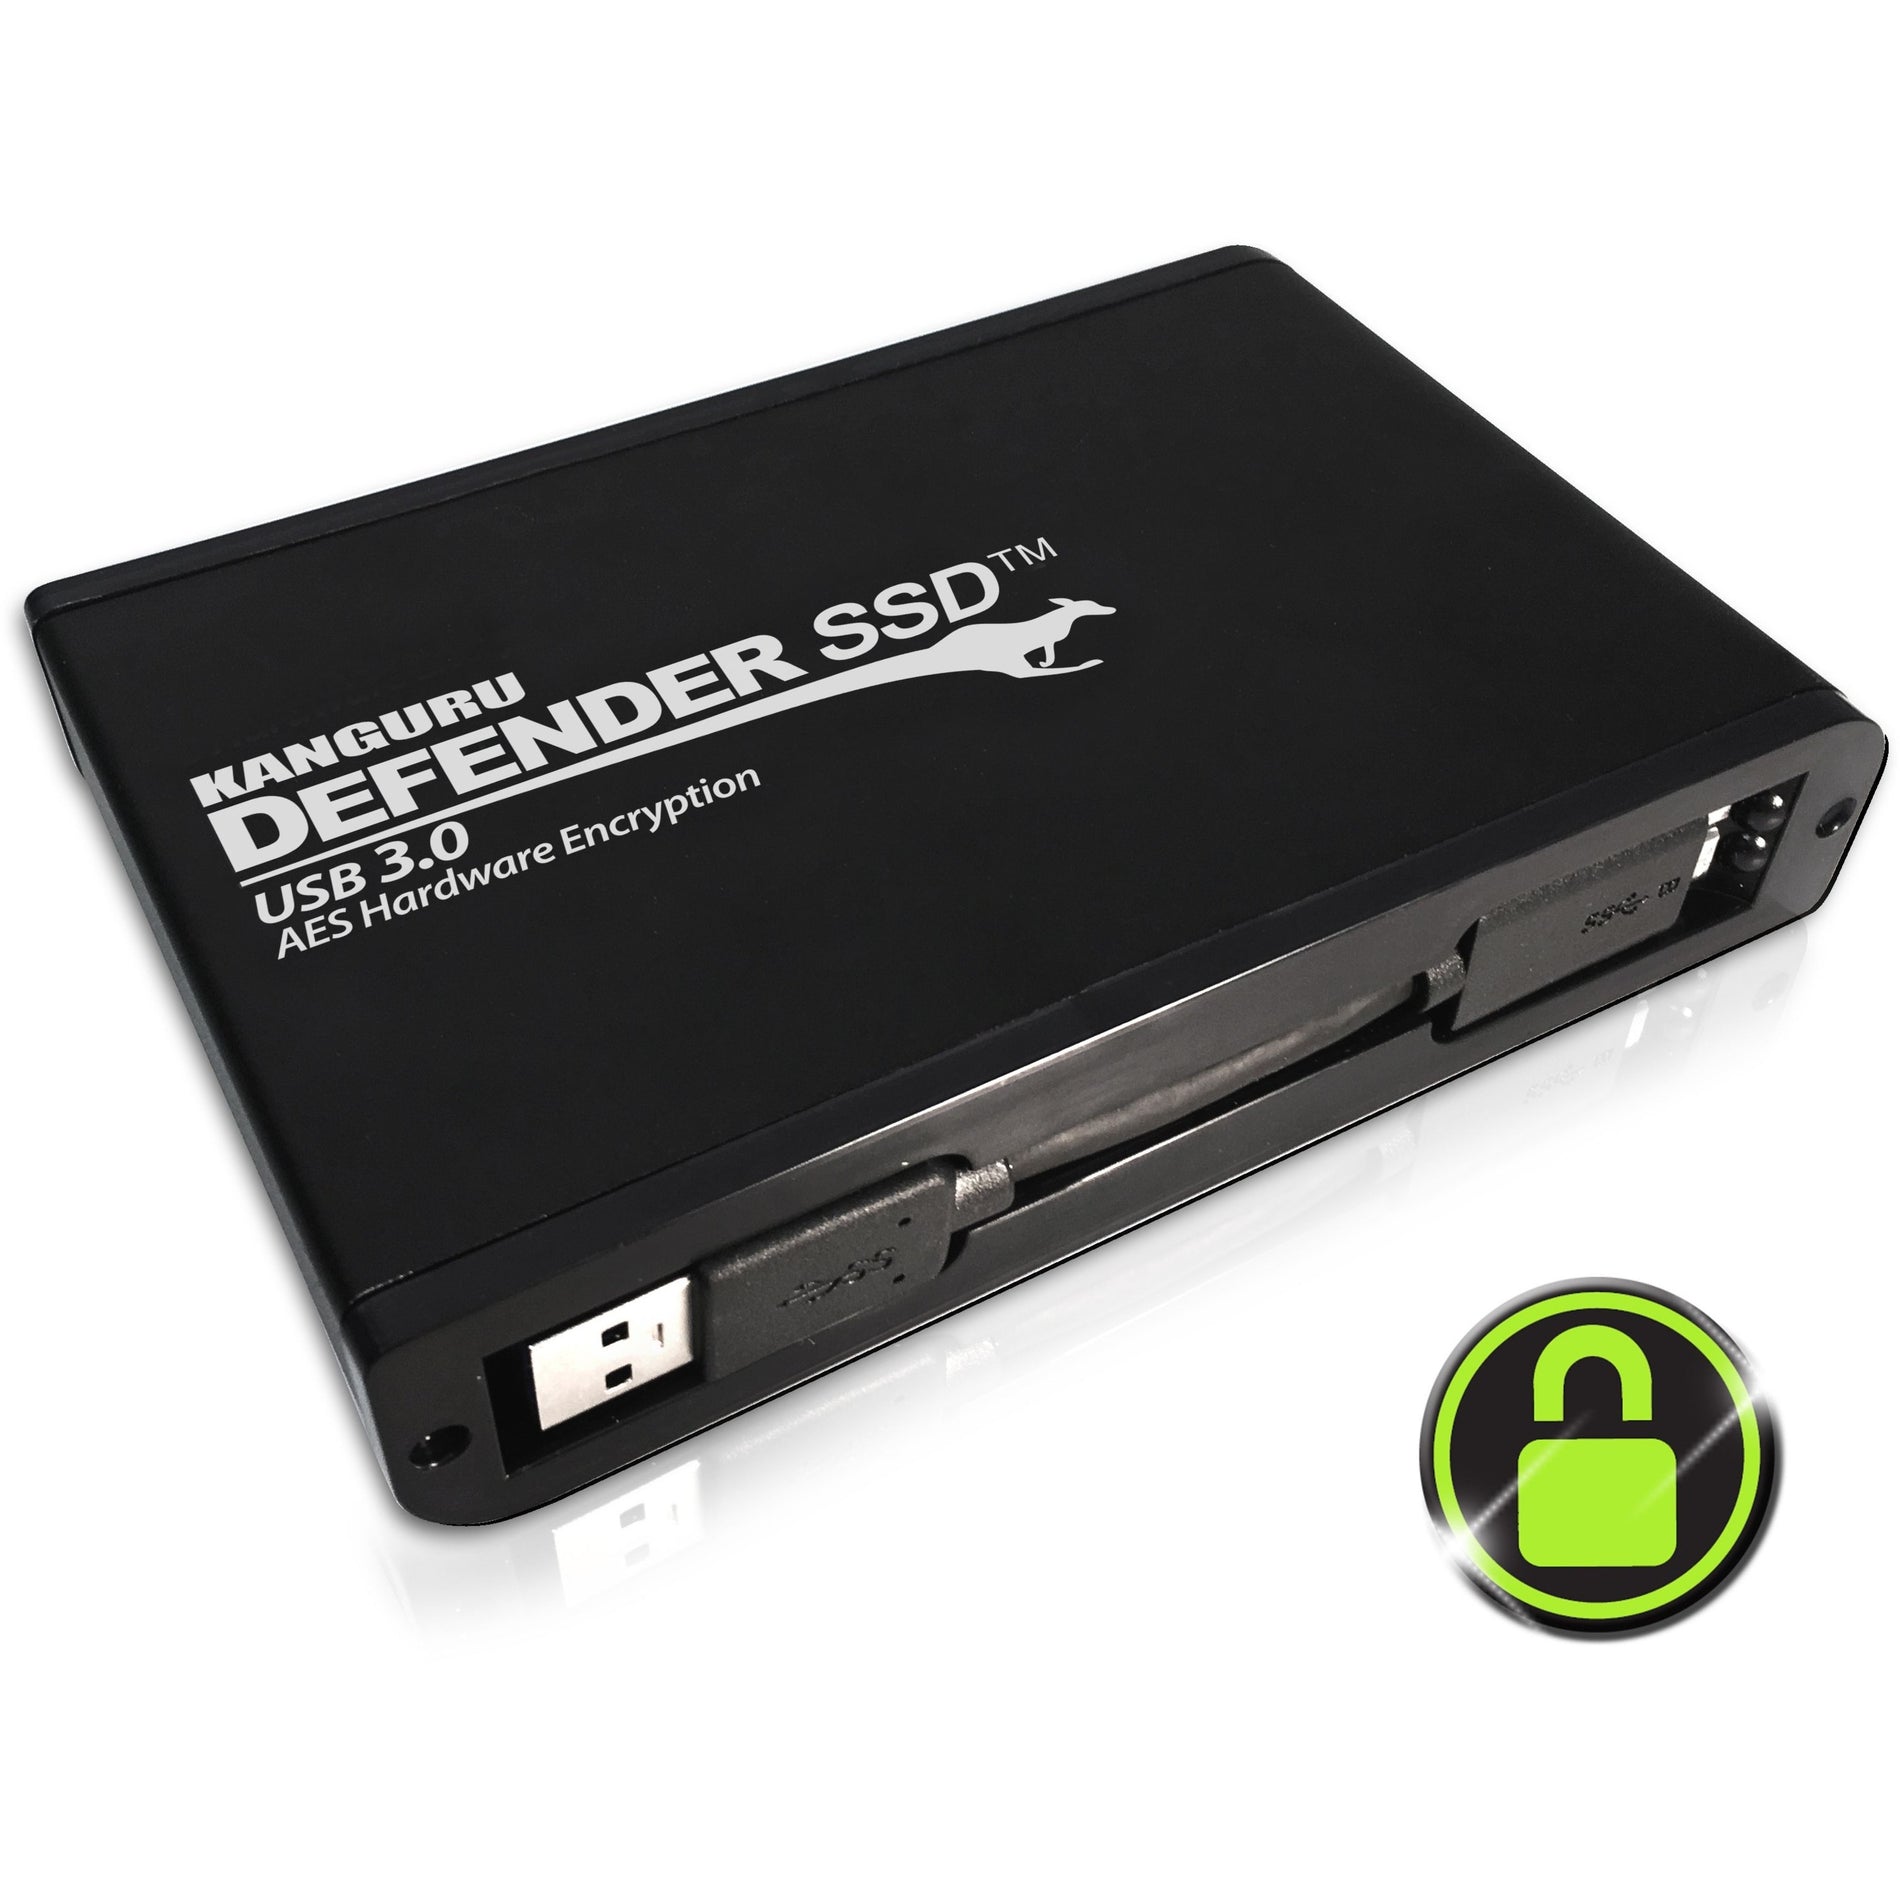 Kanguru KDH3B-35-480SSD Defender SSD 35, 480GB, AES 256-Bit Hardware Encrypted External Solid State Drive